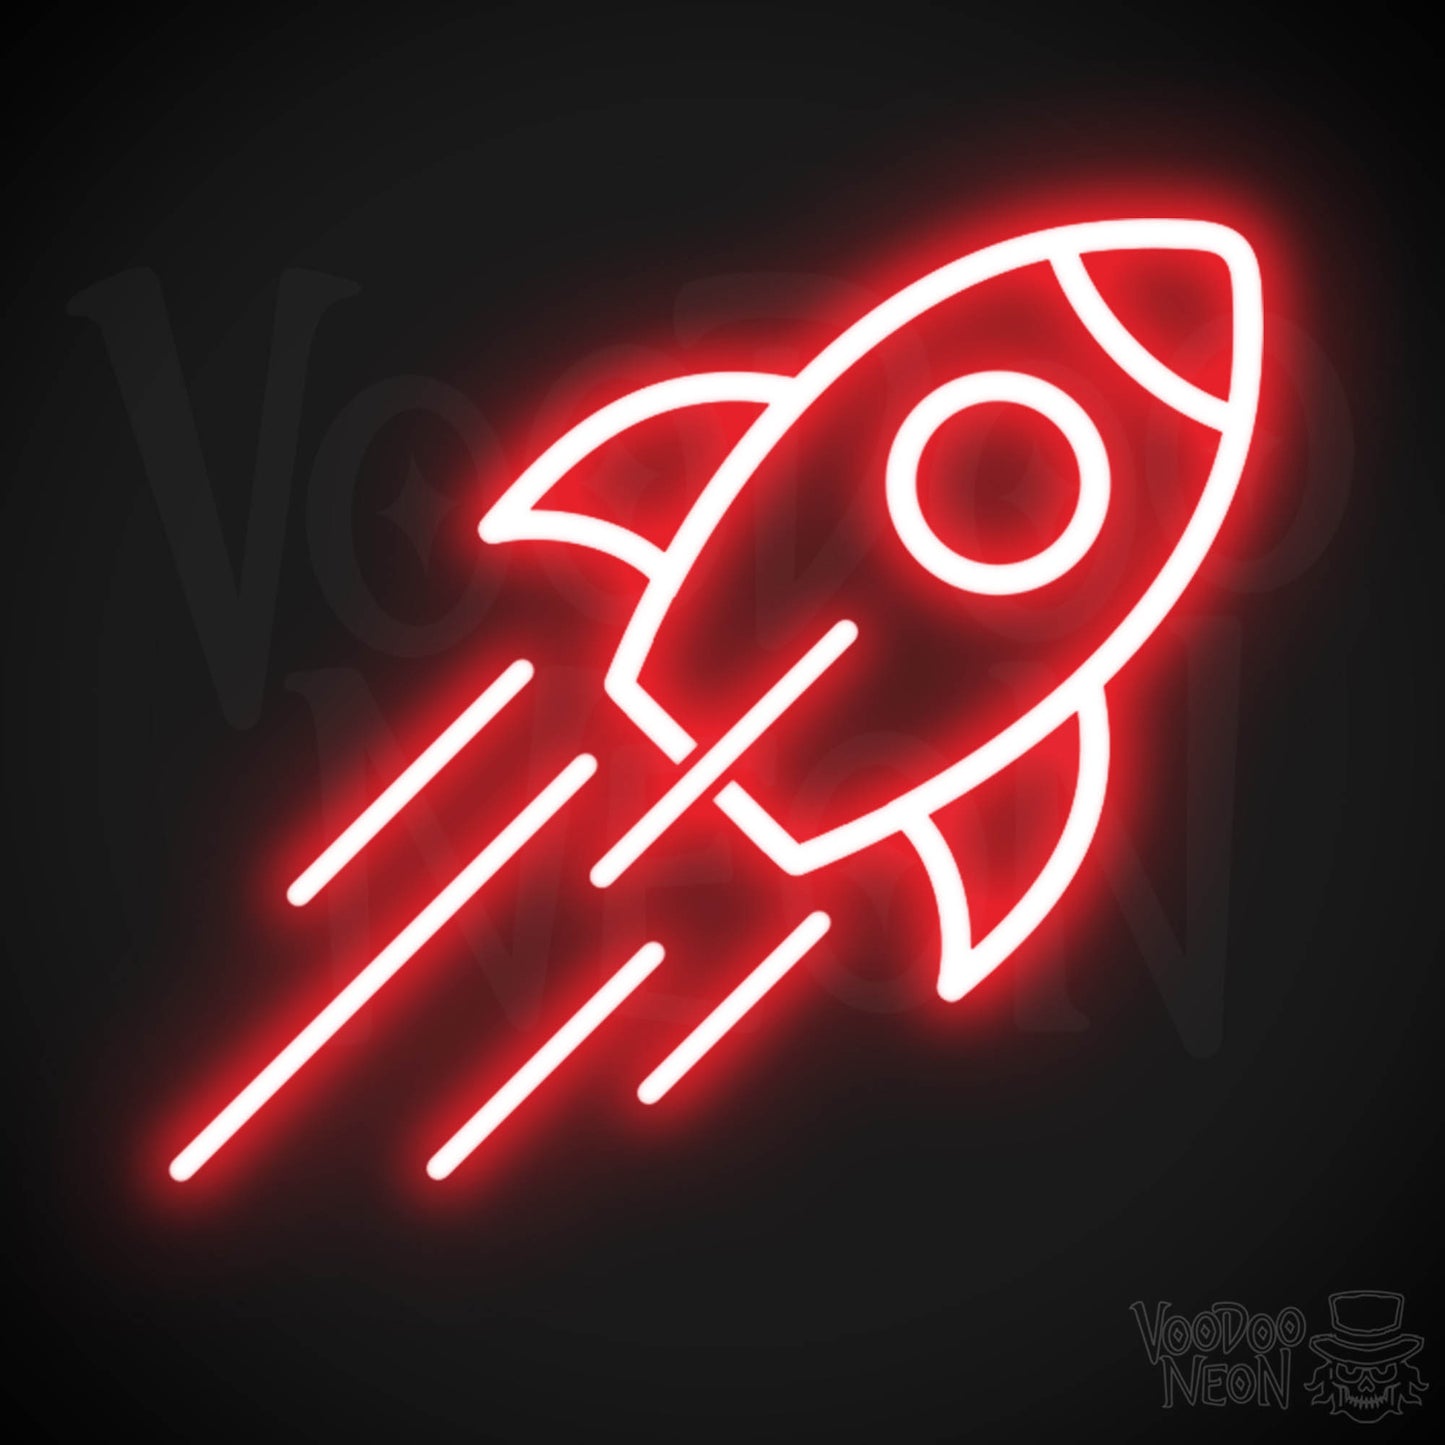 Neon Rocket - Rocket Neon Sign - Rocket Ship Neon Wall Art - Color Red